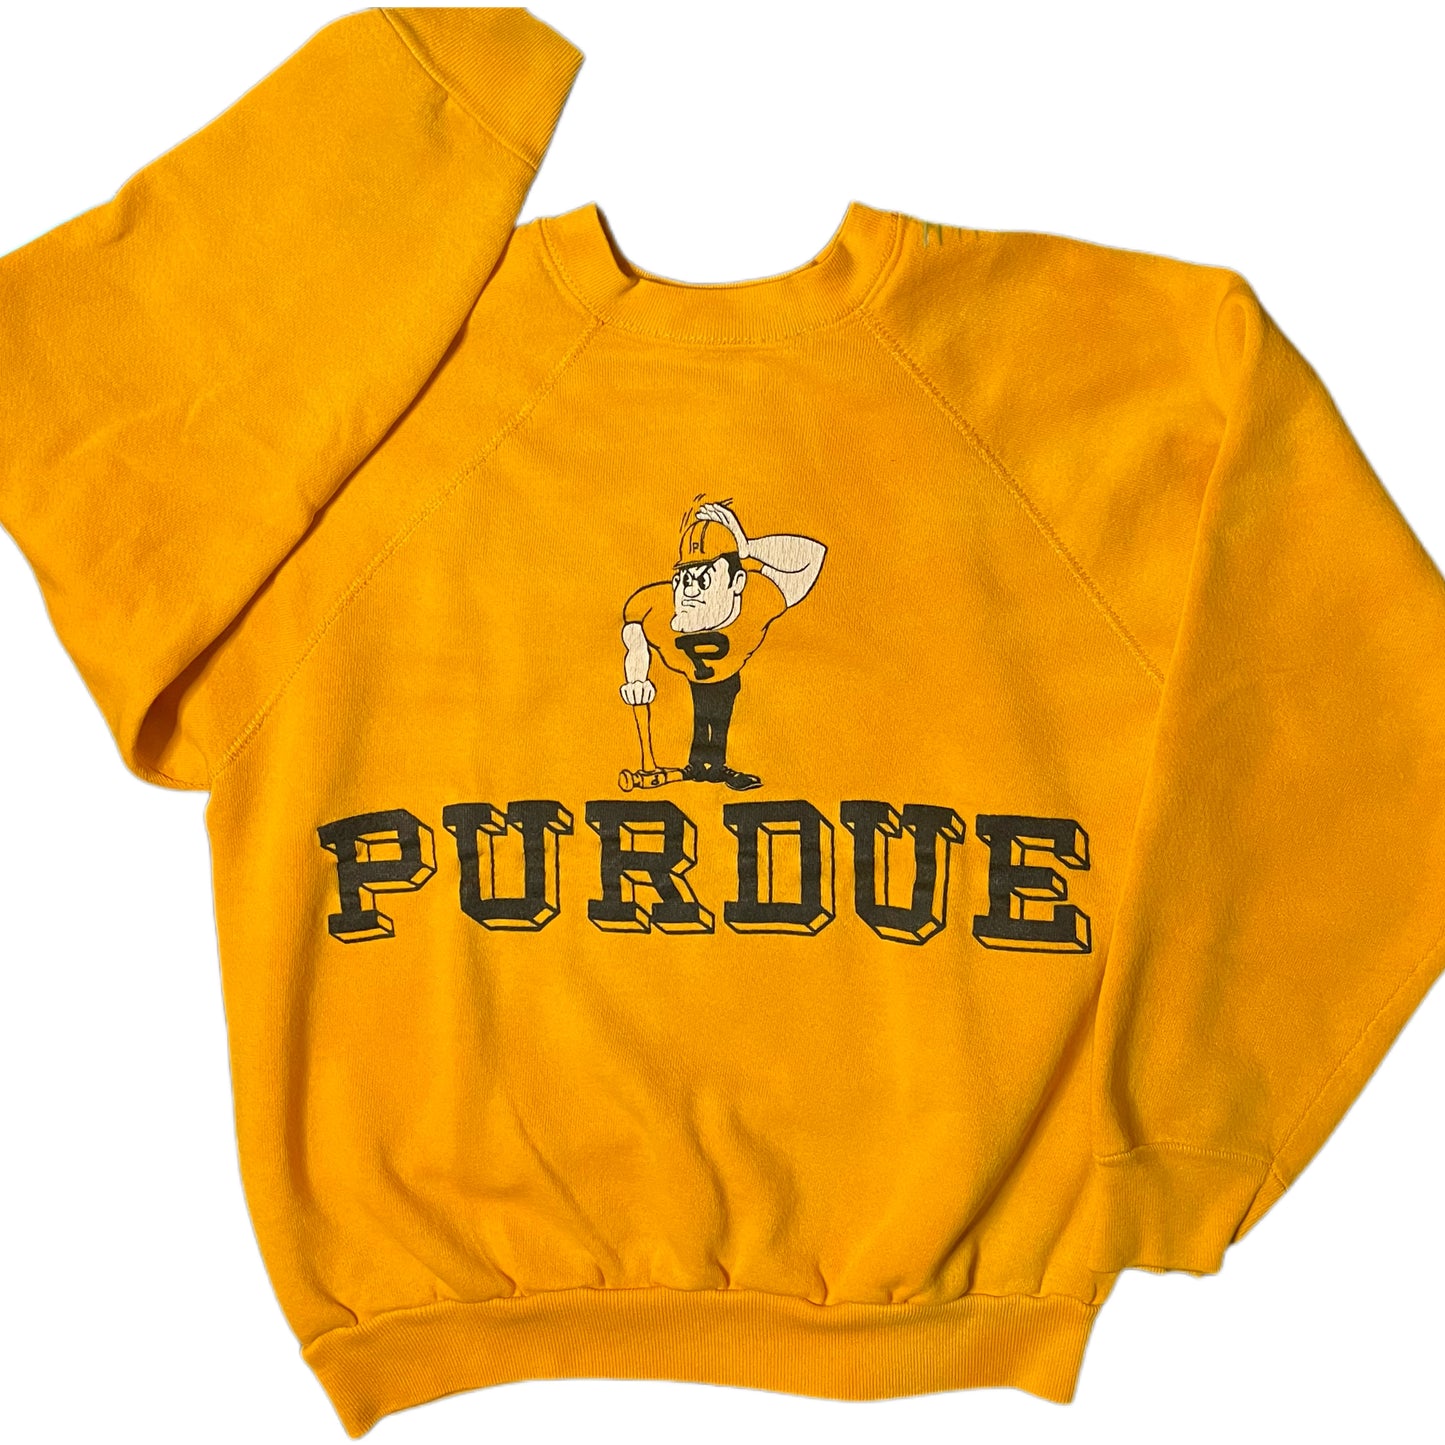 vintage purdue university sweatshirt boilermakers college shirt for men and women